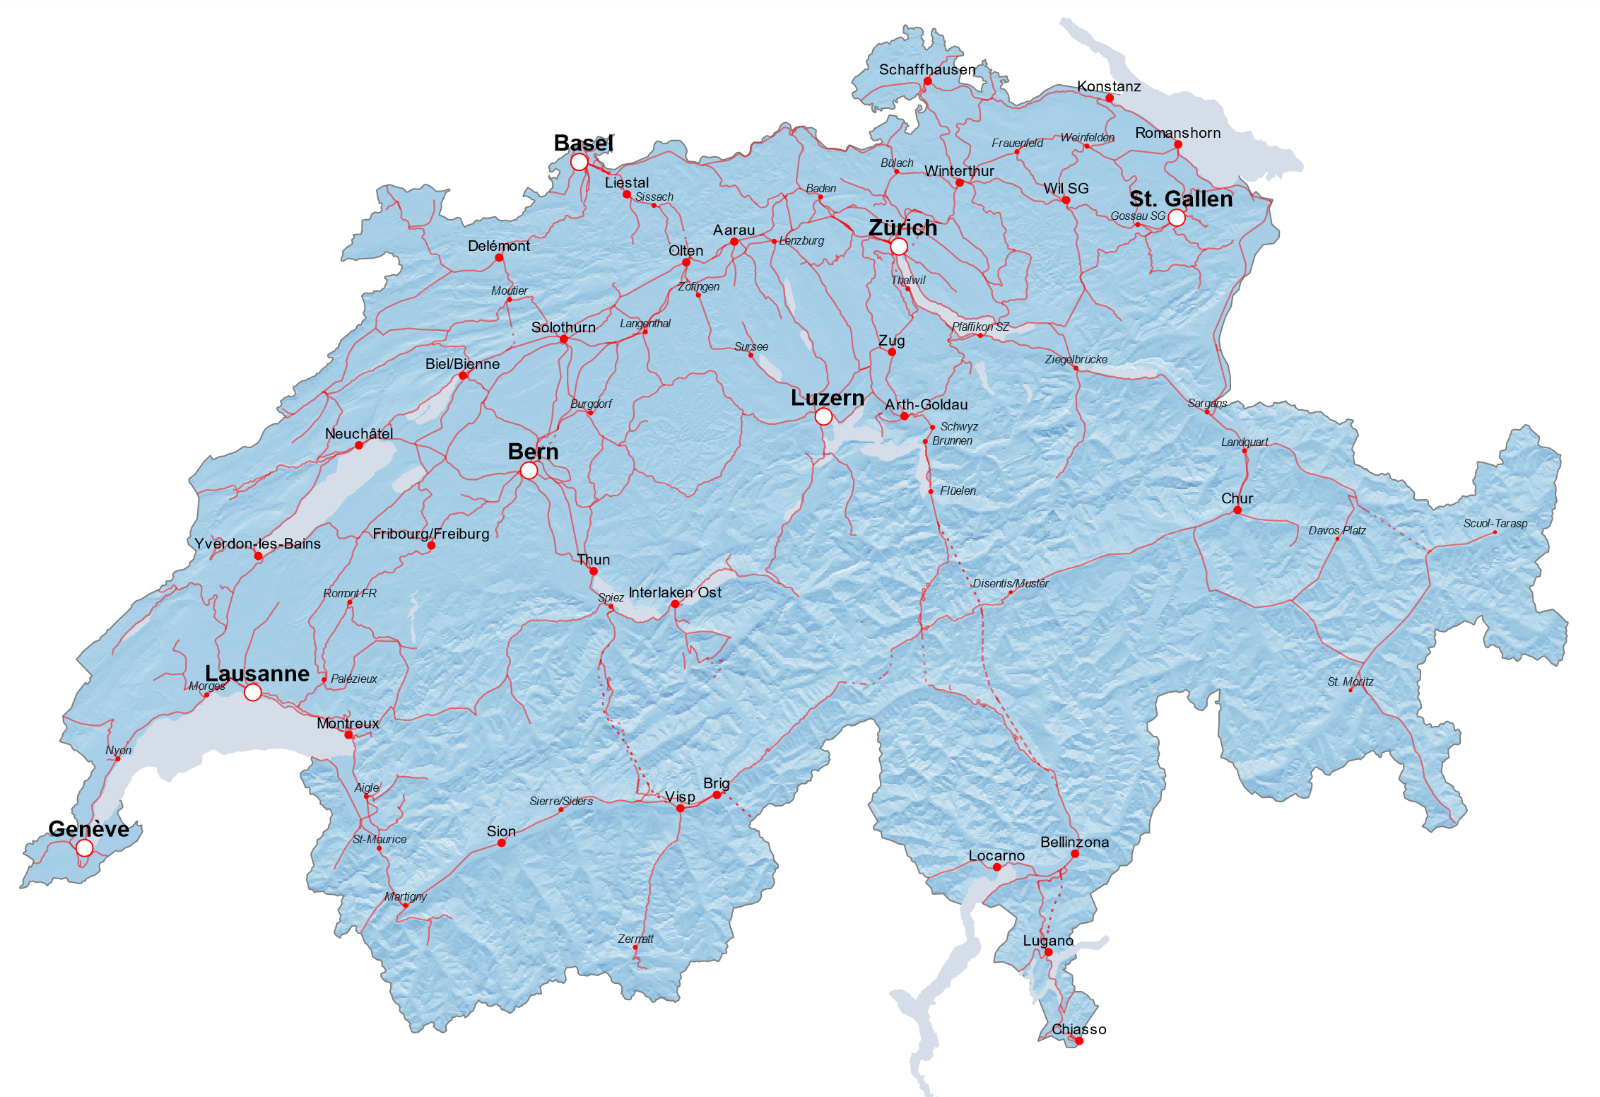 Switzerland topography and train network